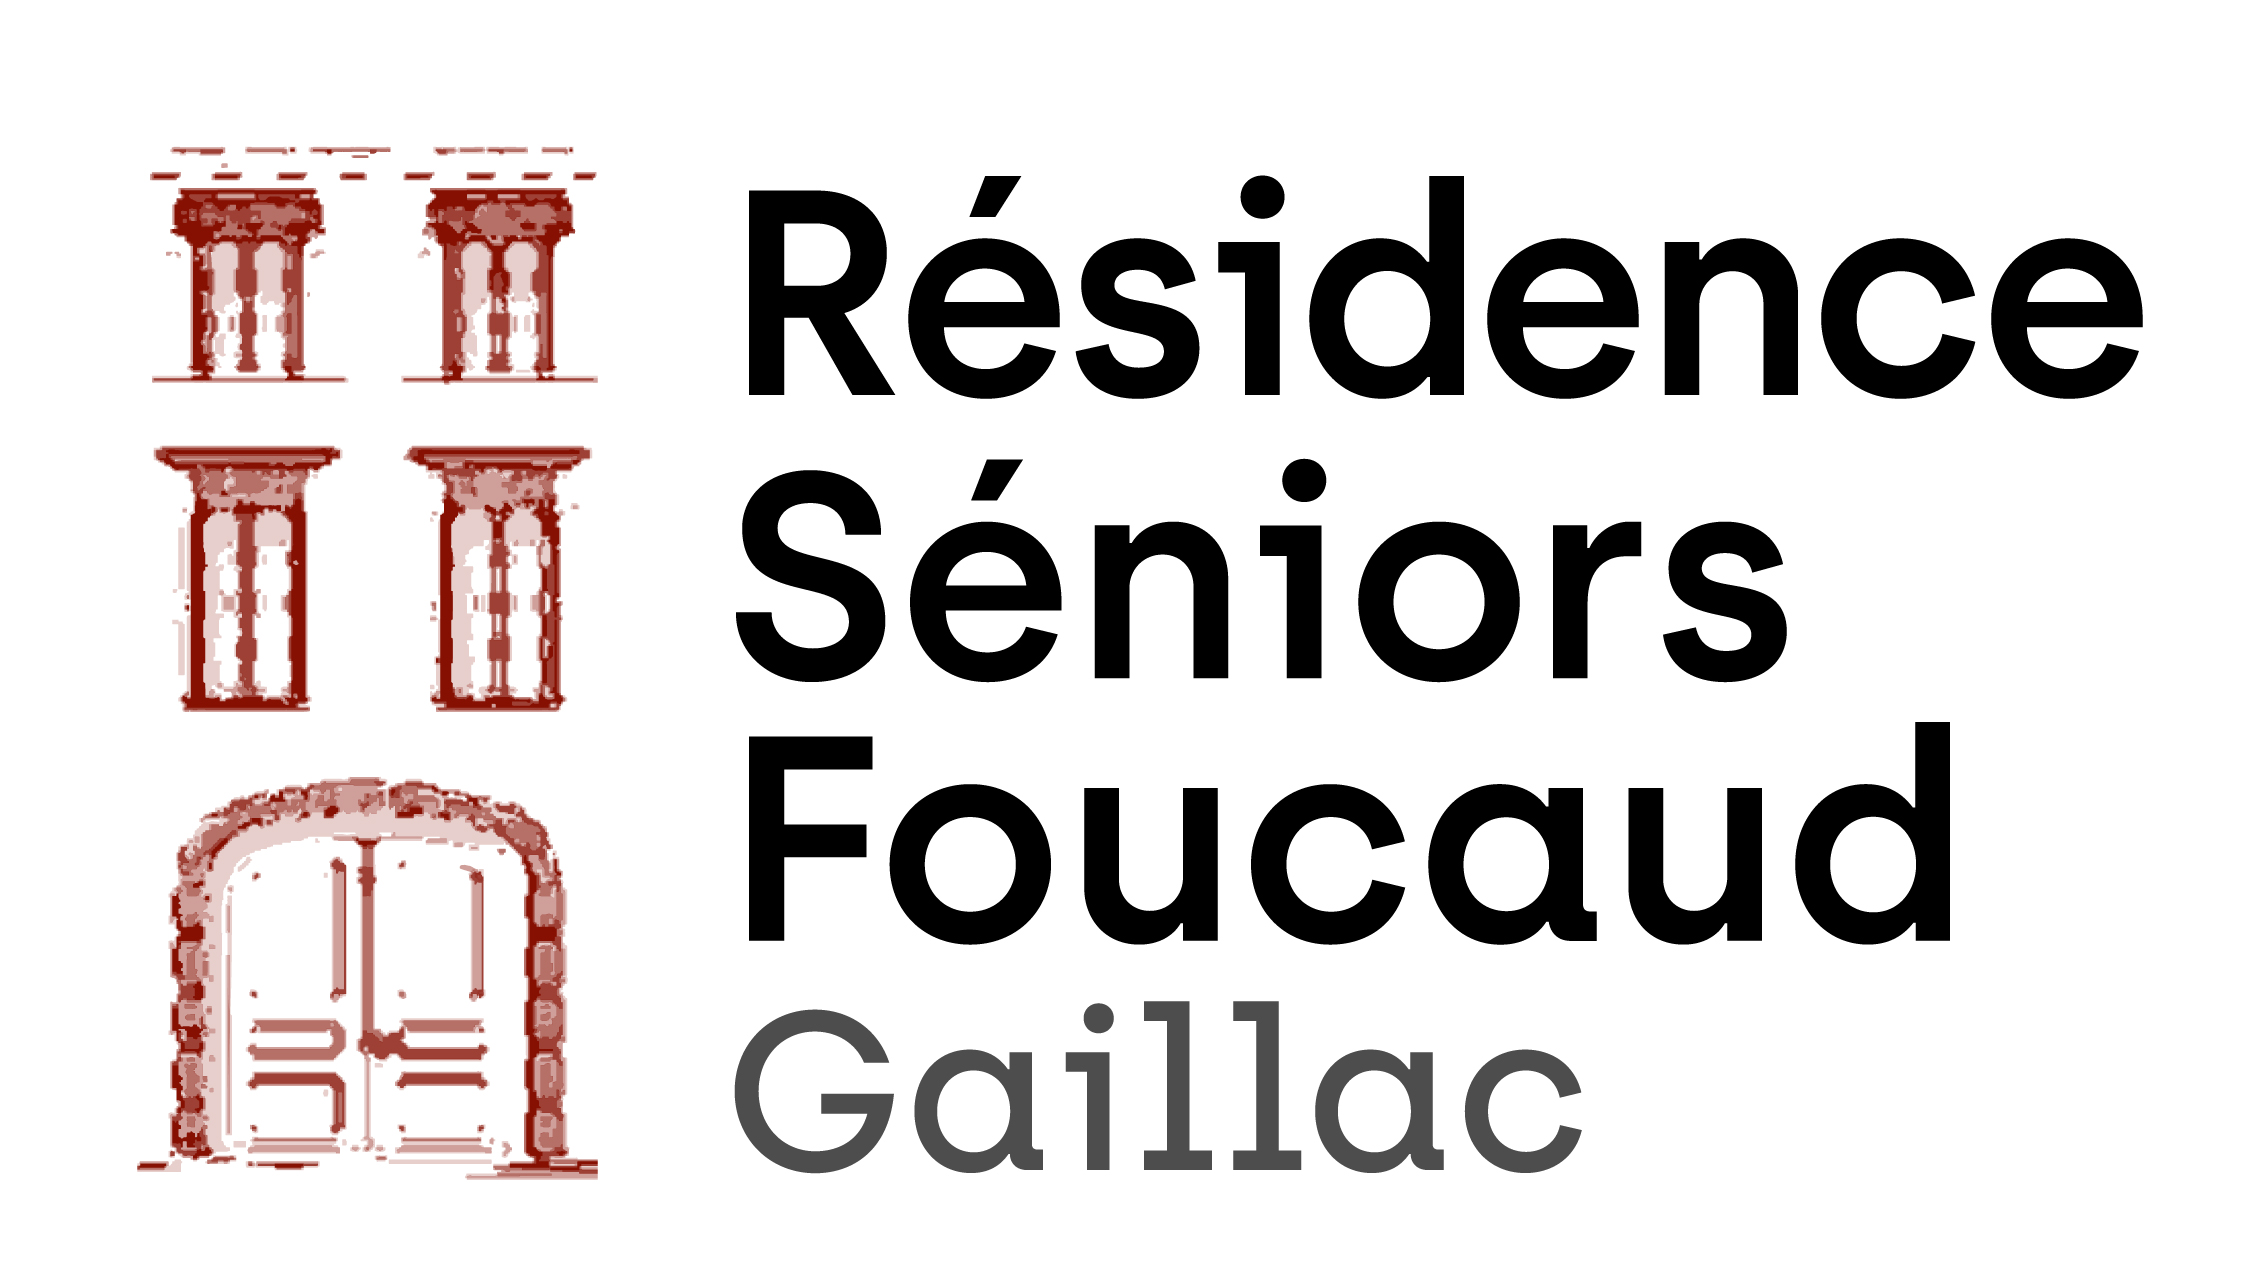 Résidence sénior du parc Foucaud à Gaillac